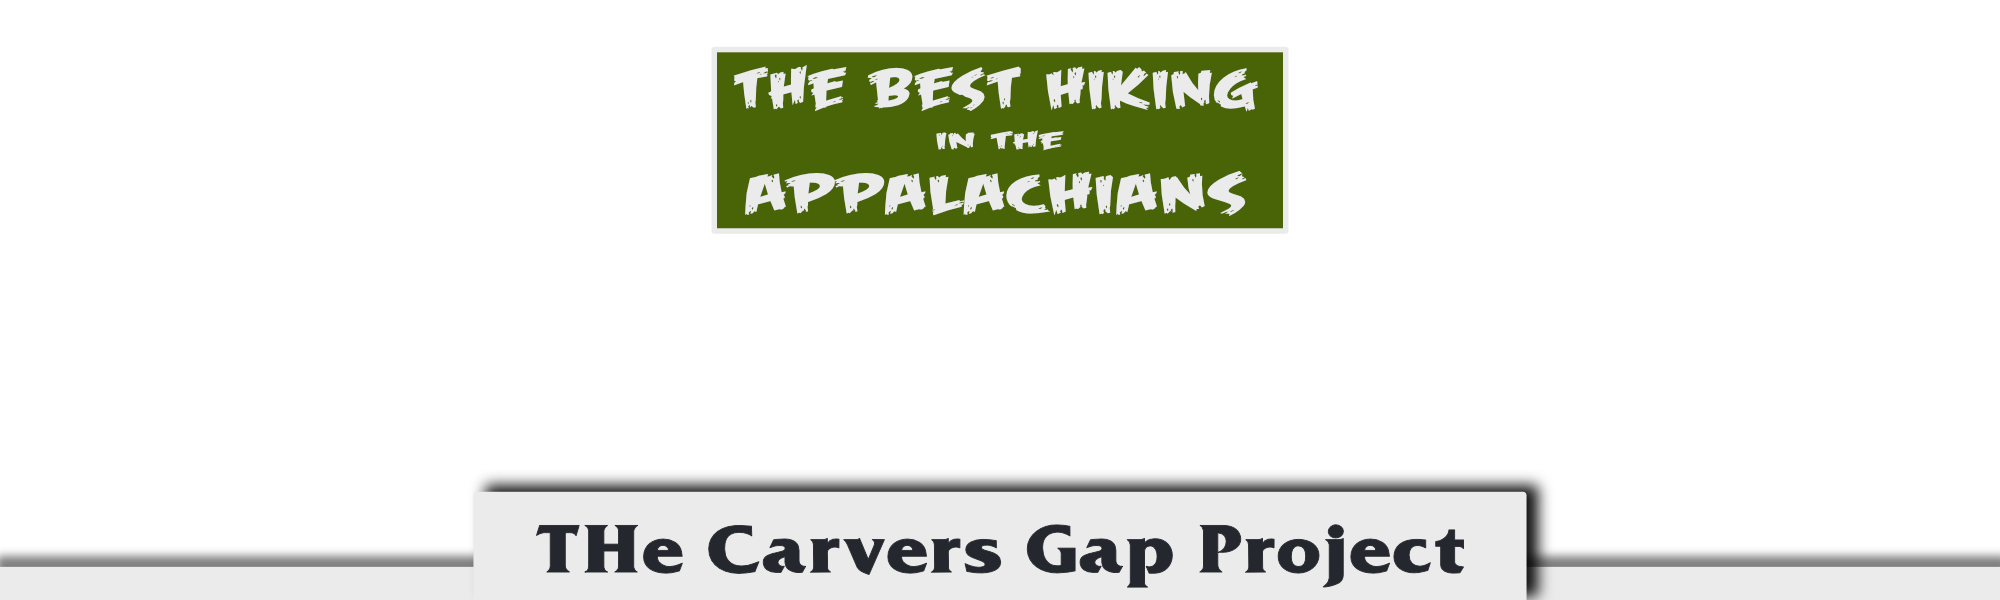 Best Hiking in the Appalachians